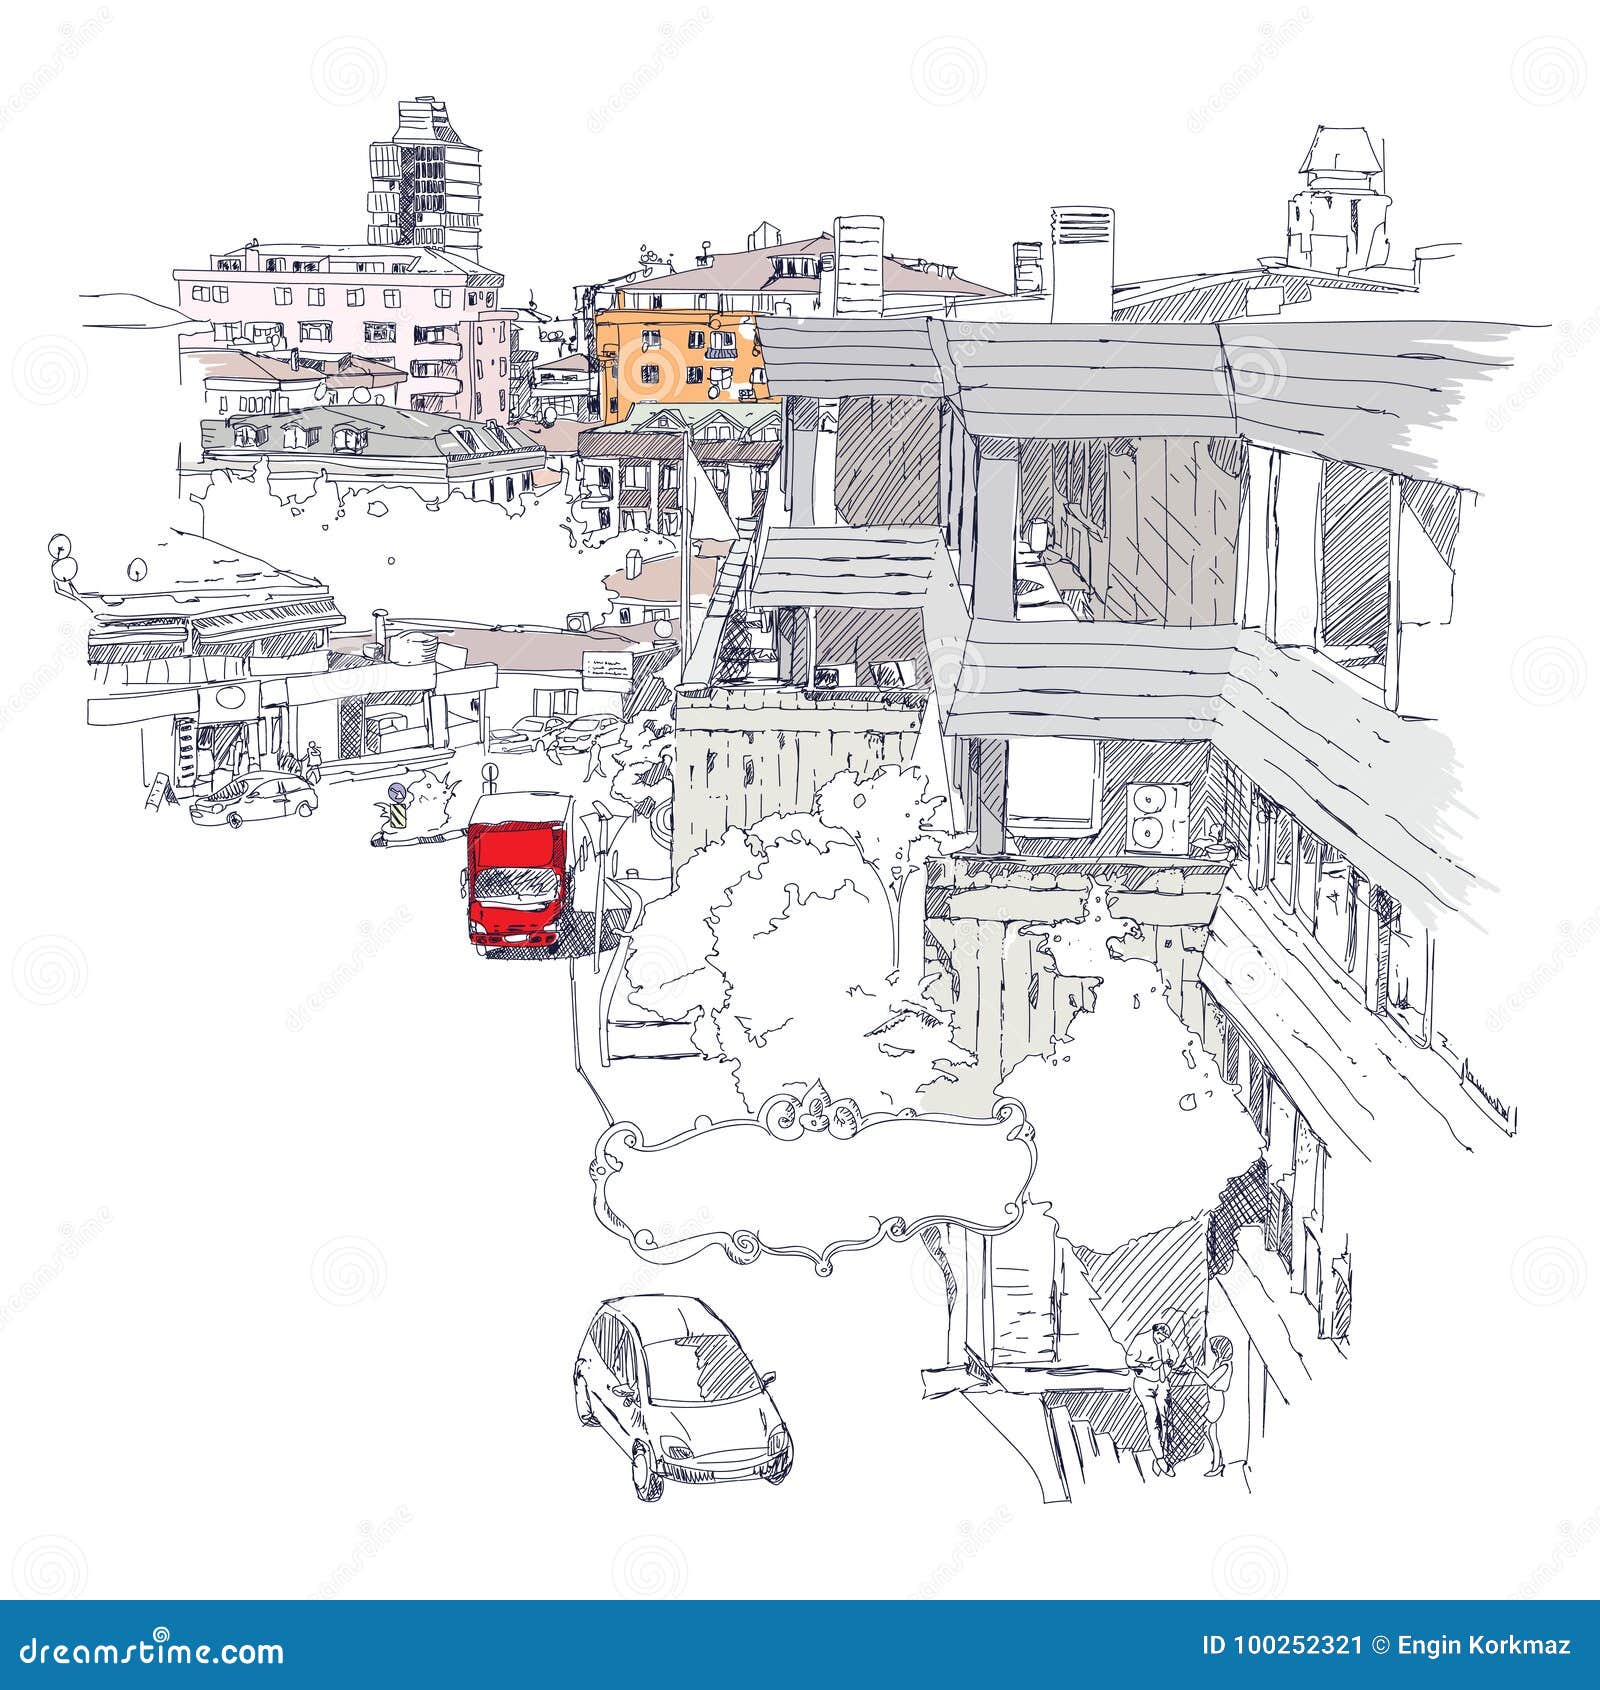 urban sketch of mecidiyekoy district of istanbul